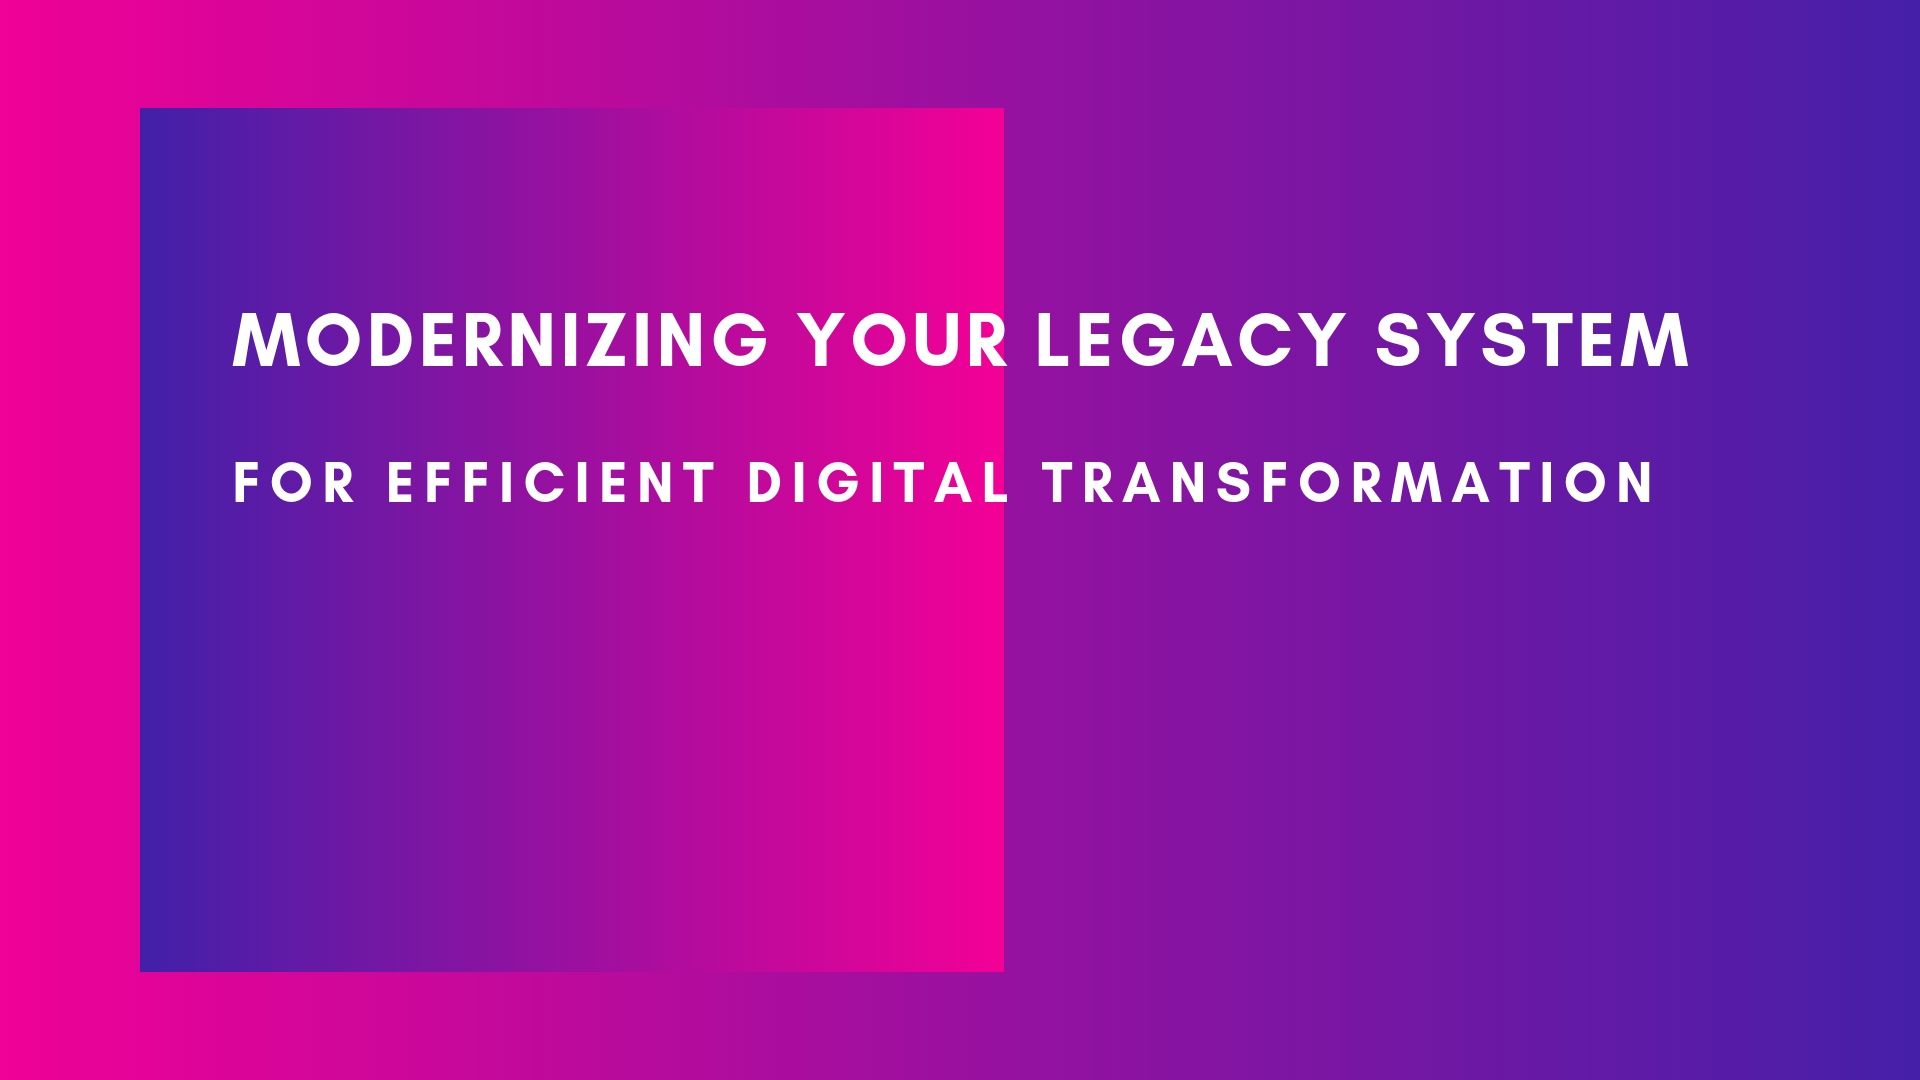 Modernizing your legacy system for efficient digital transformation